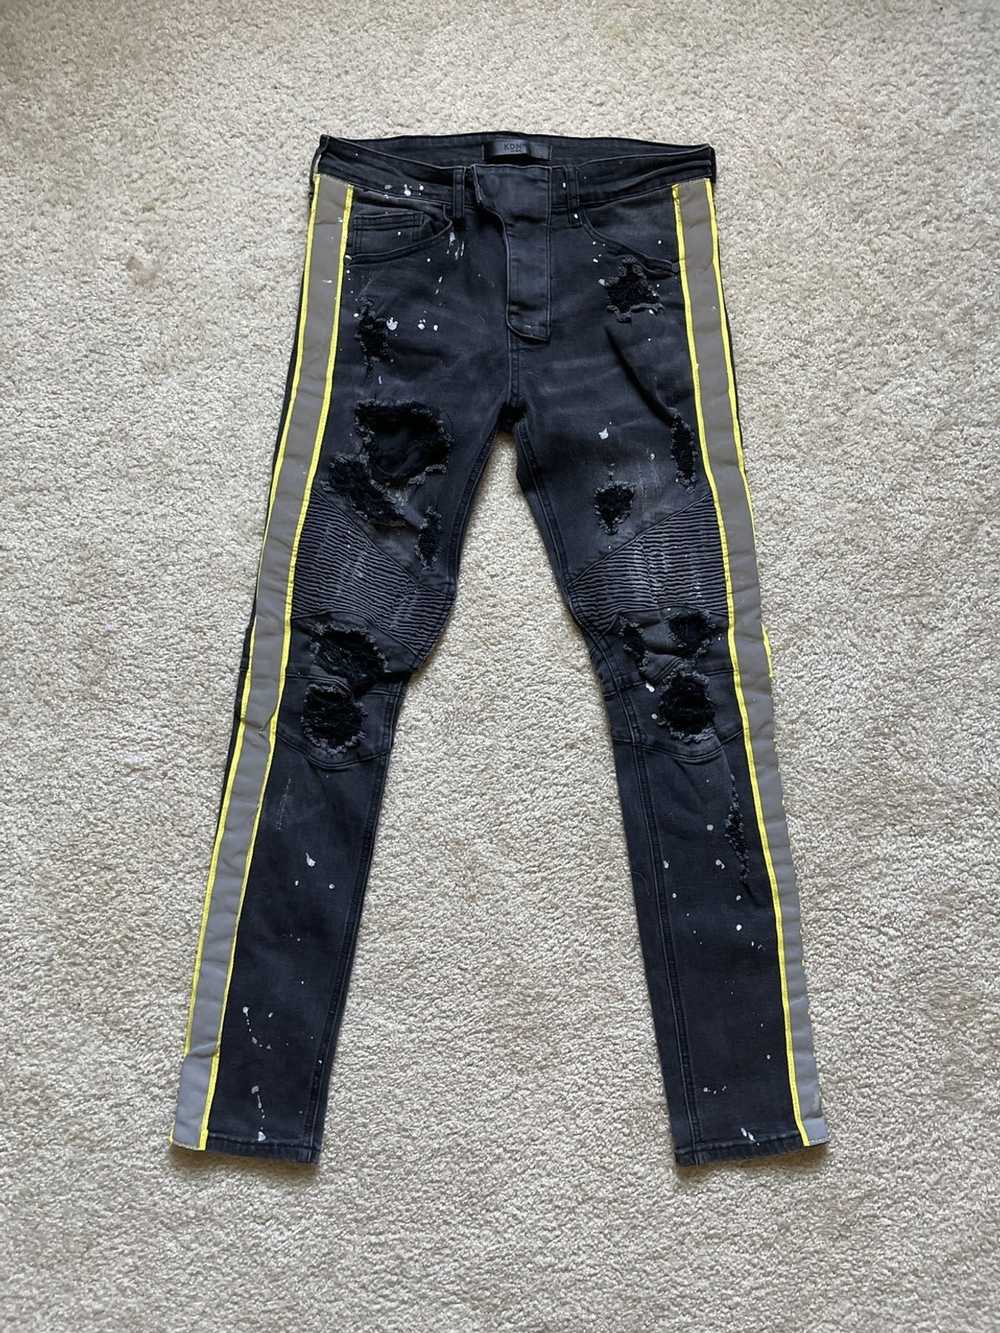 Other KDNK reflective pants - image 2